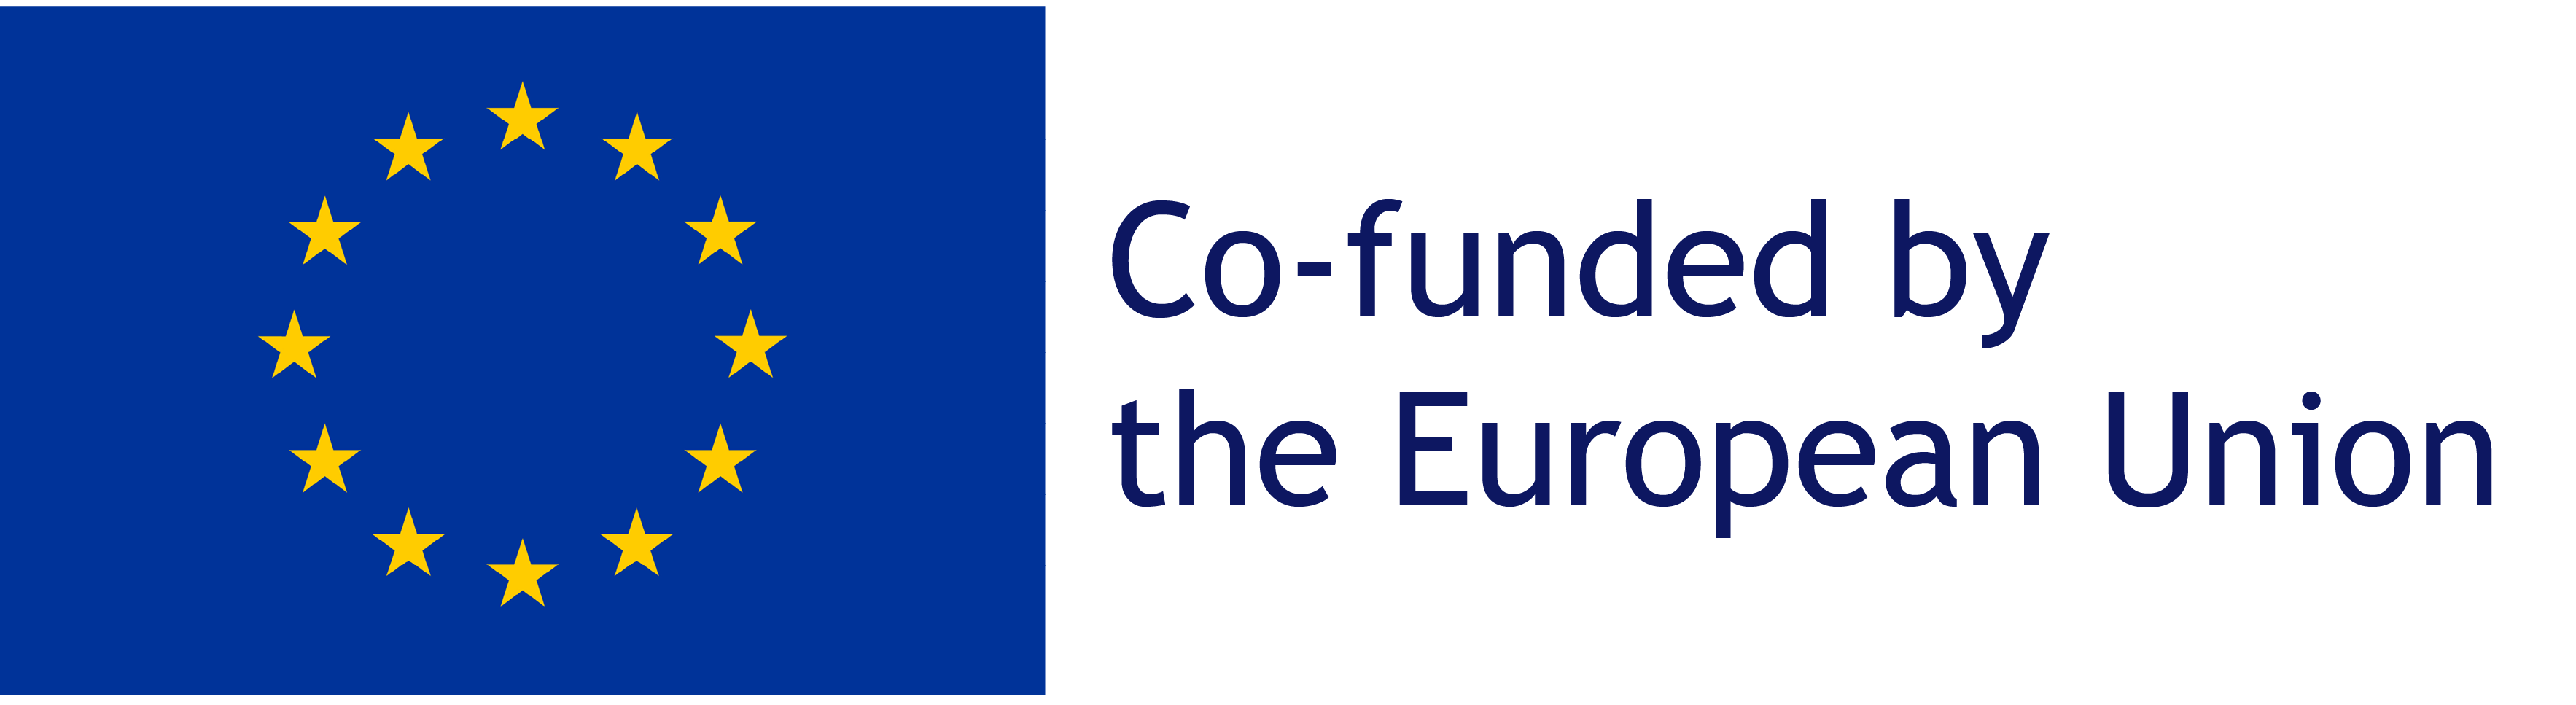 Co Funded by the EU logo ok